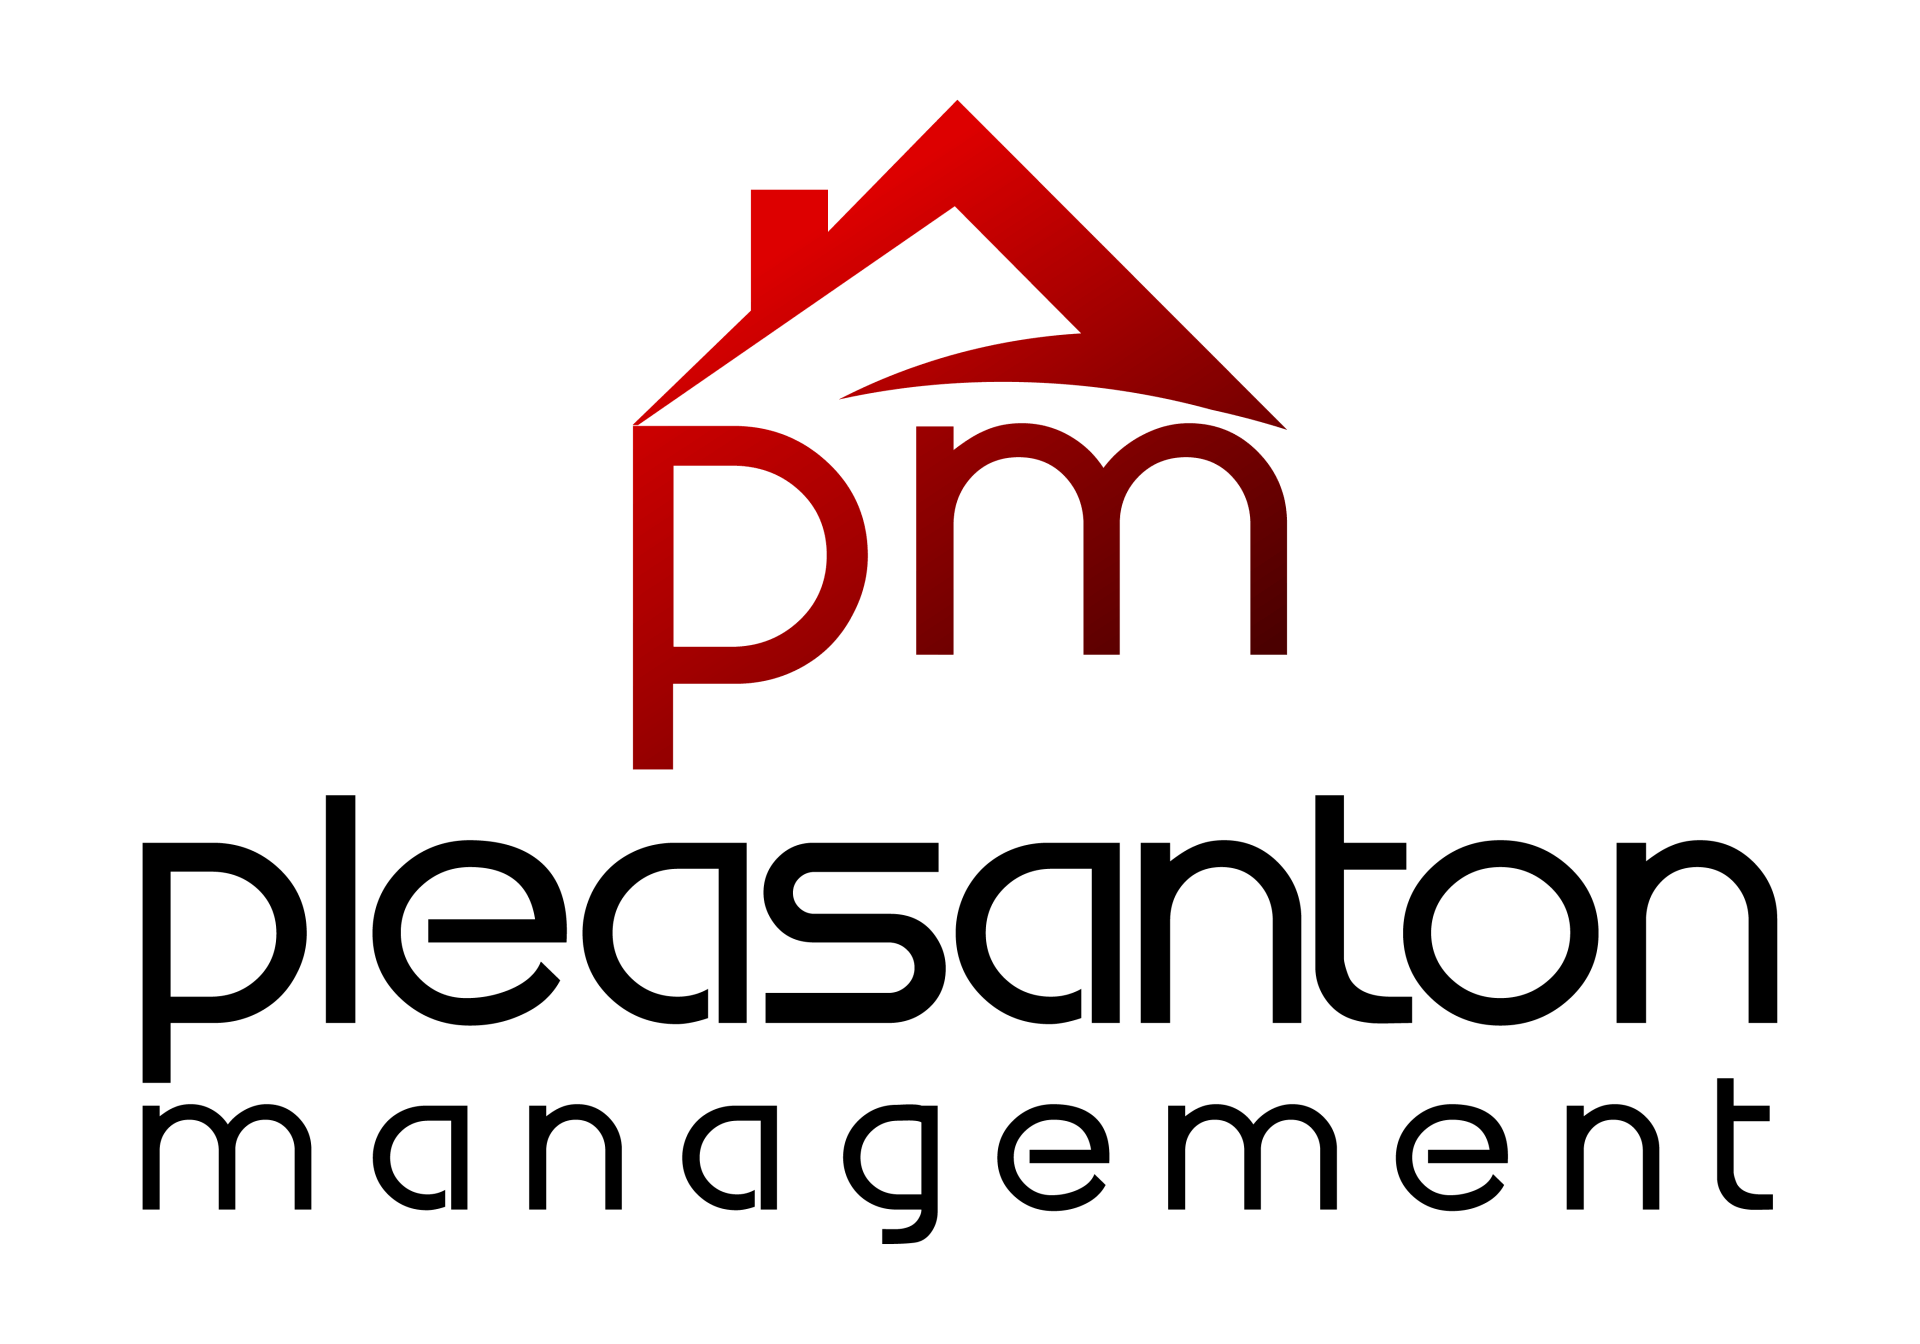 Pleasanton Management Logo